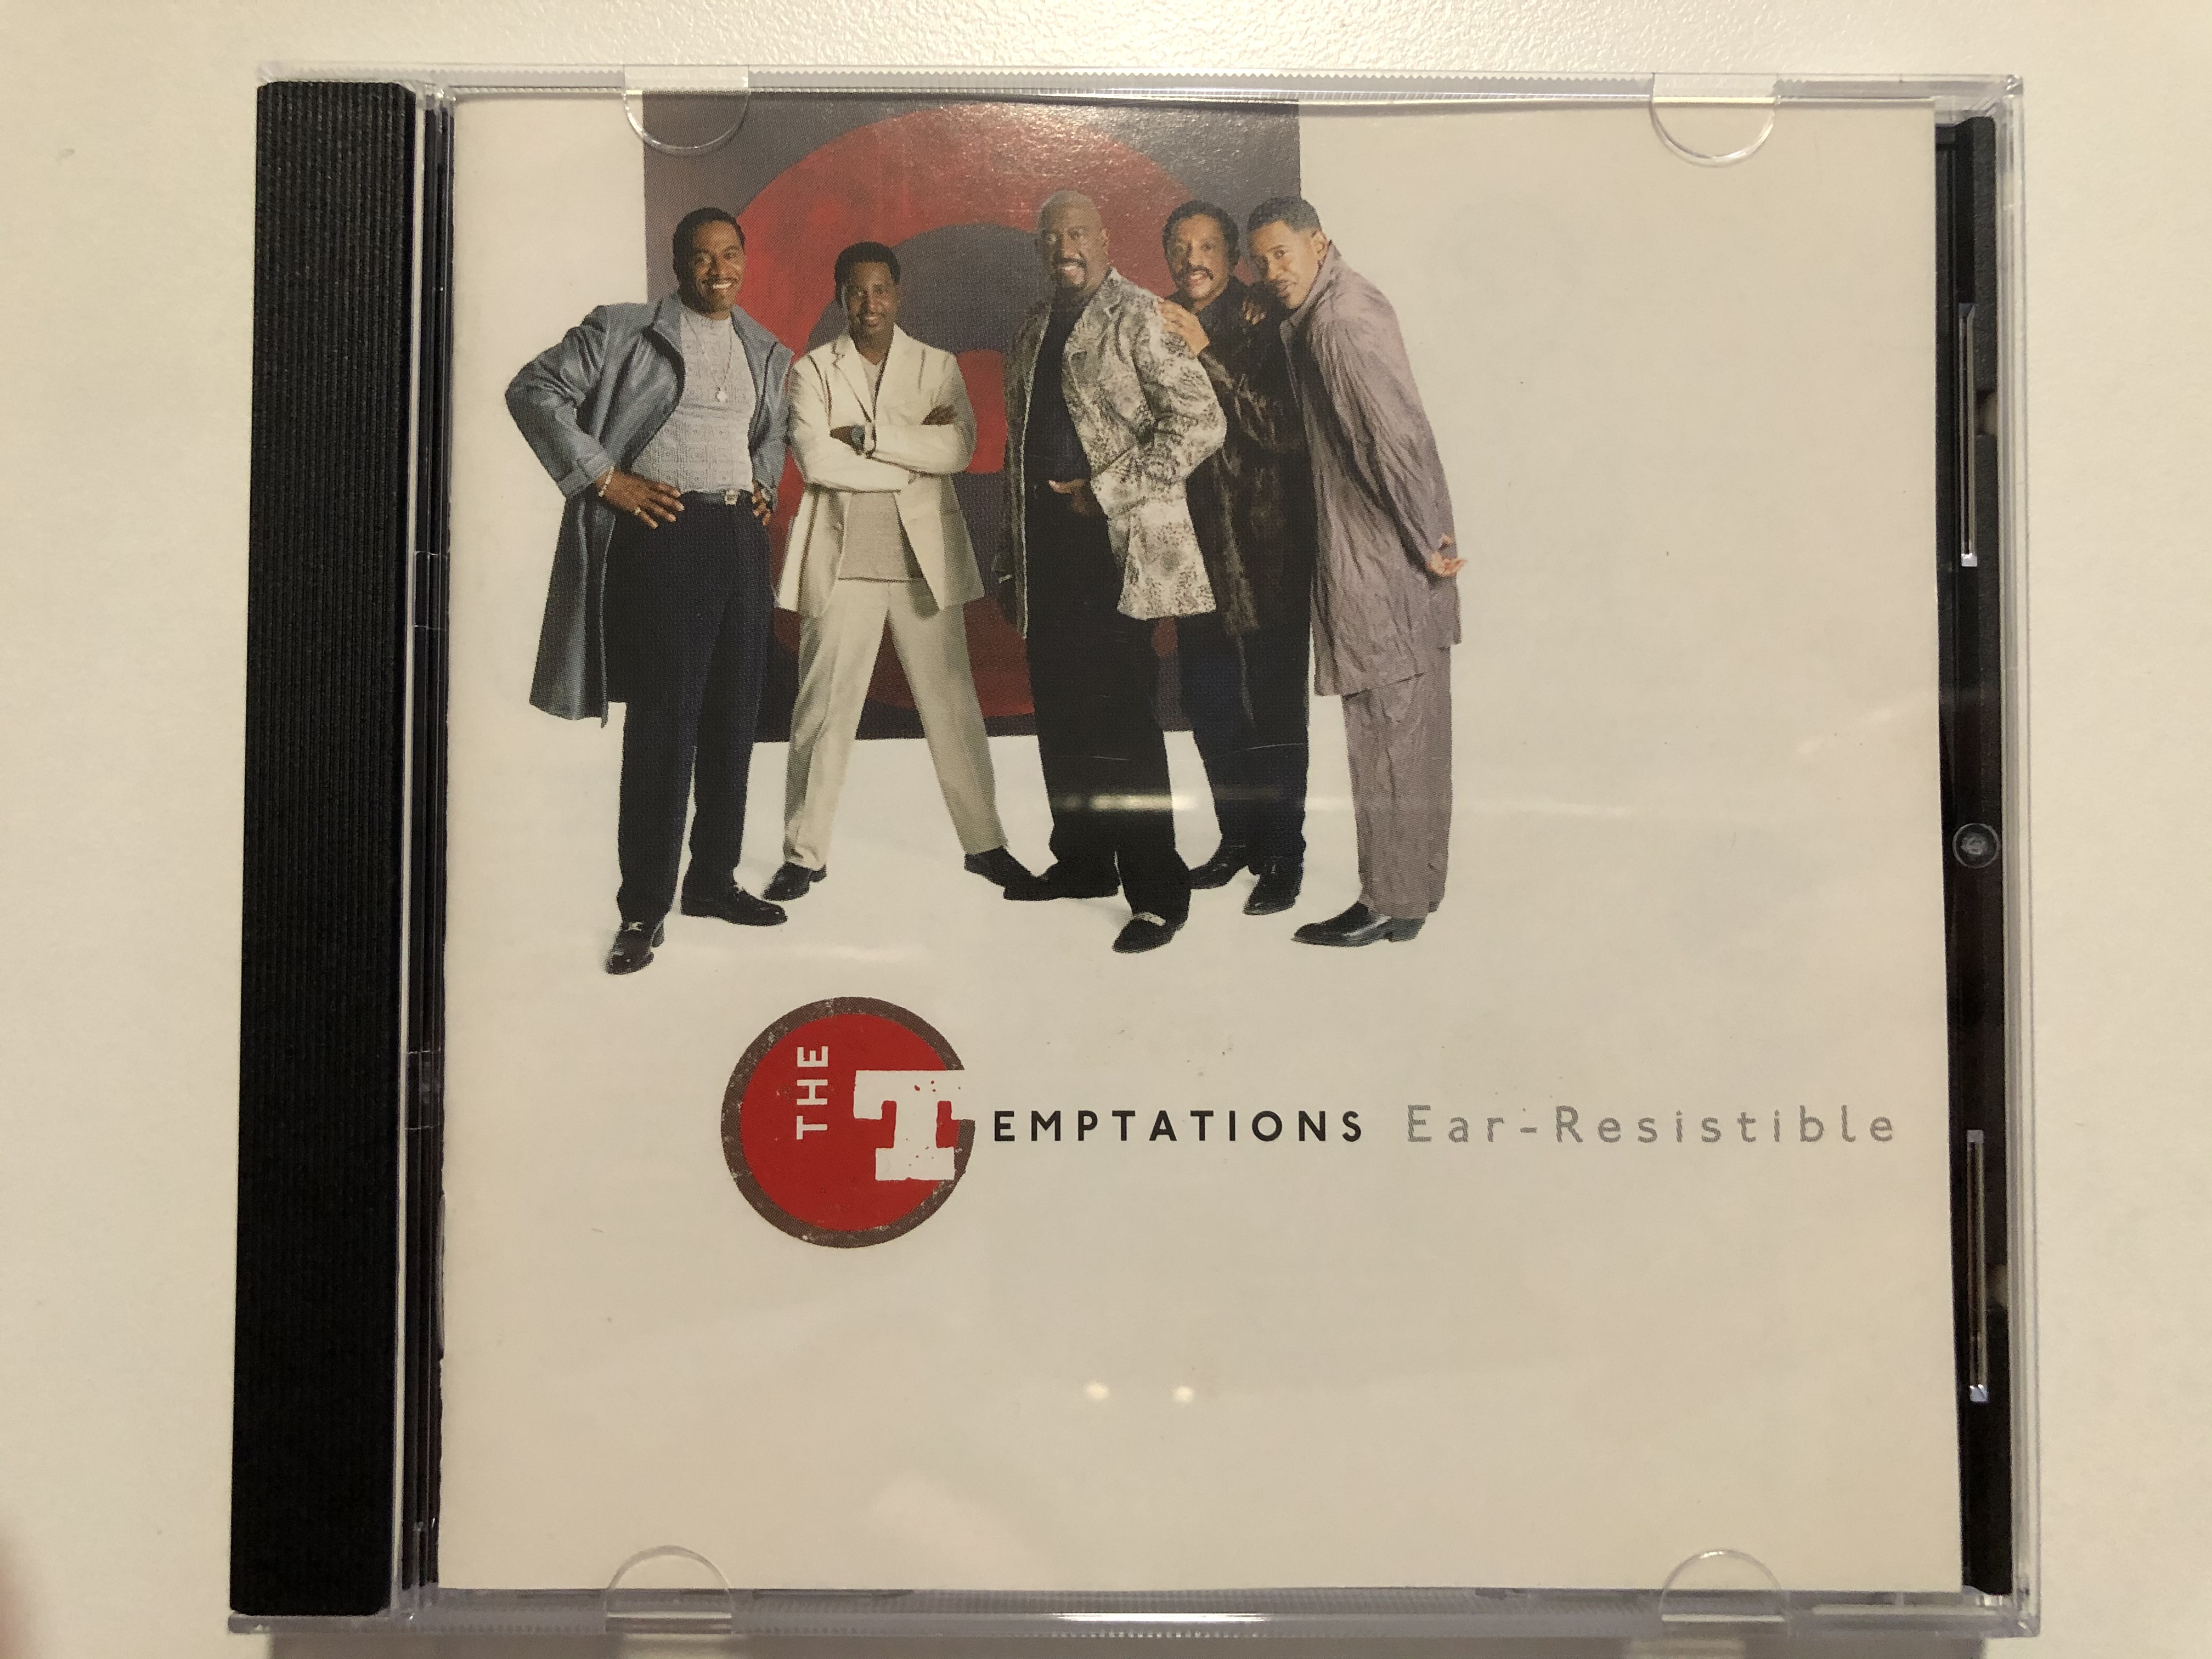 the-temptations-ear-resistible-motown-audio-cd-2000-157-742-2-1-.jpg